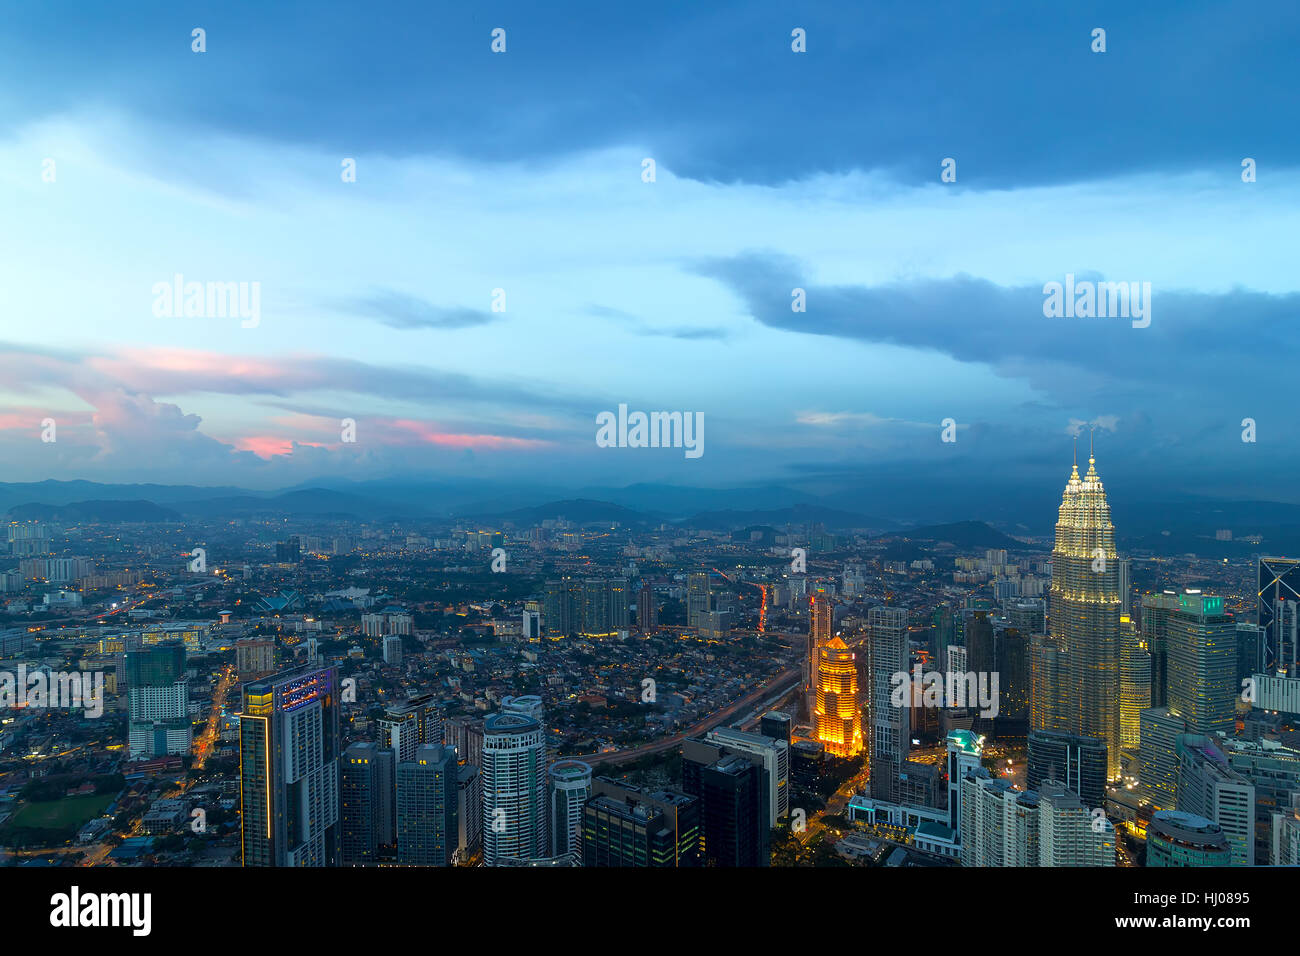 Paisaje urbano de Kuala Lumpur durante la noche azul crepúsculo hora vista aérea Foto de stock